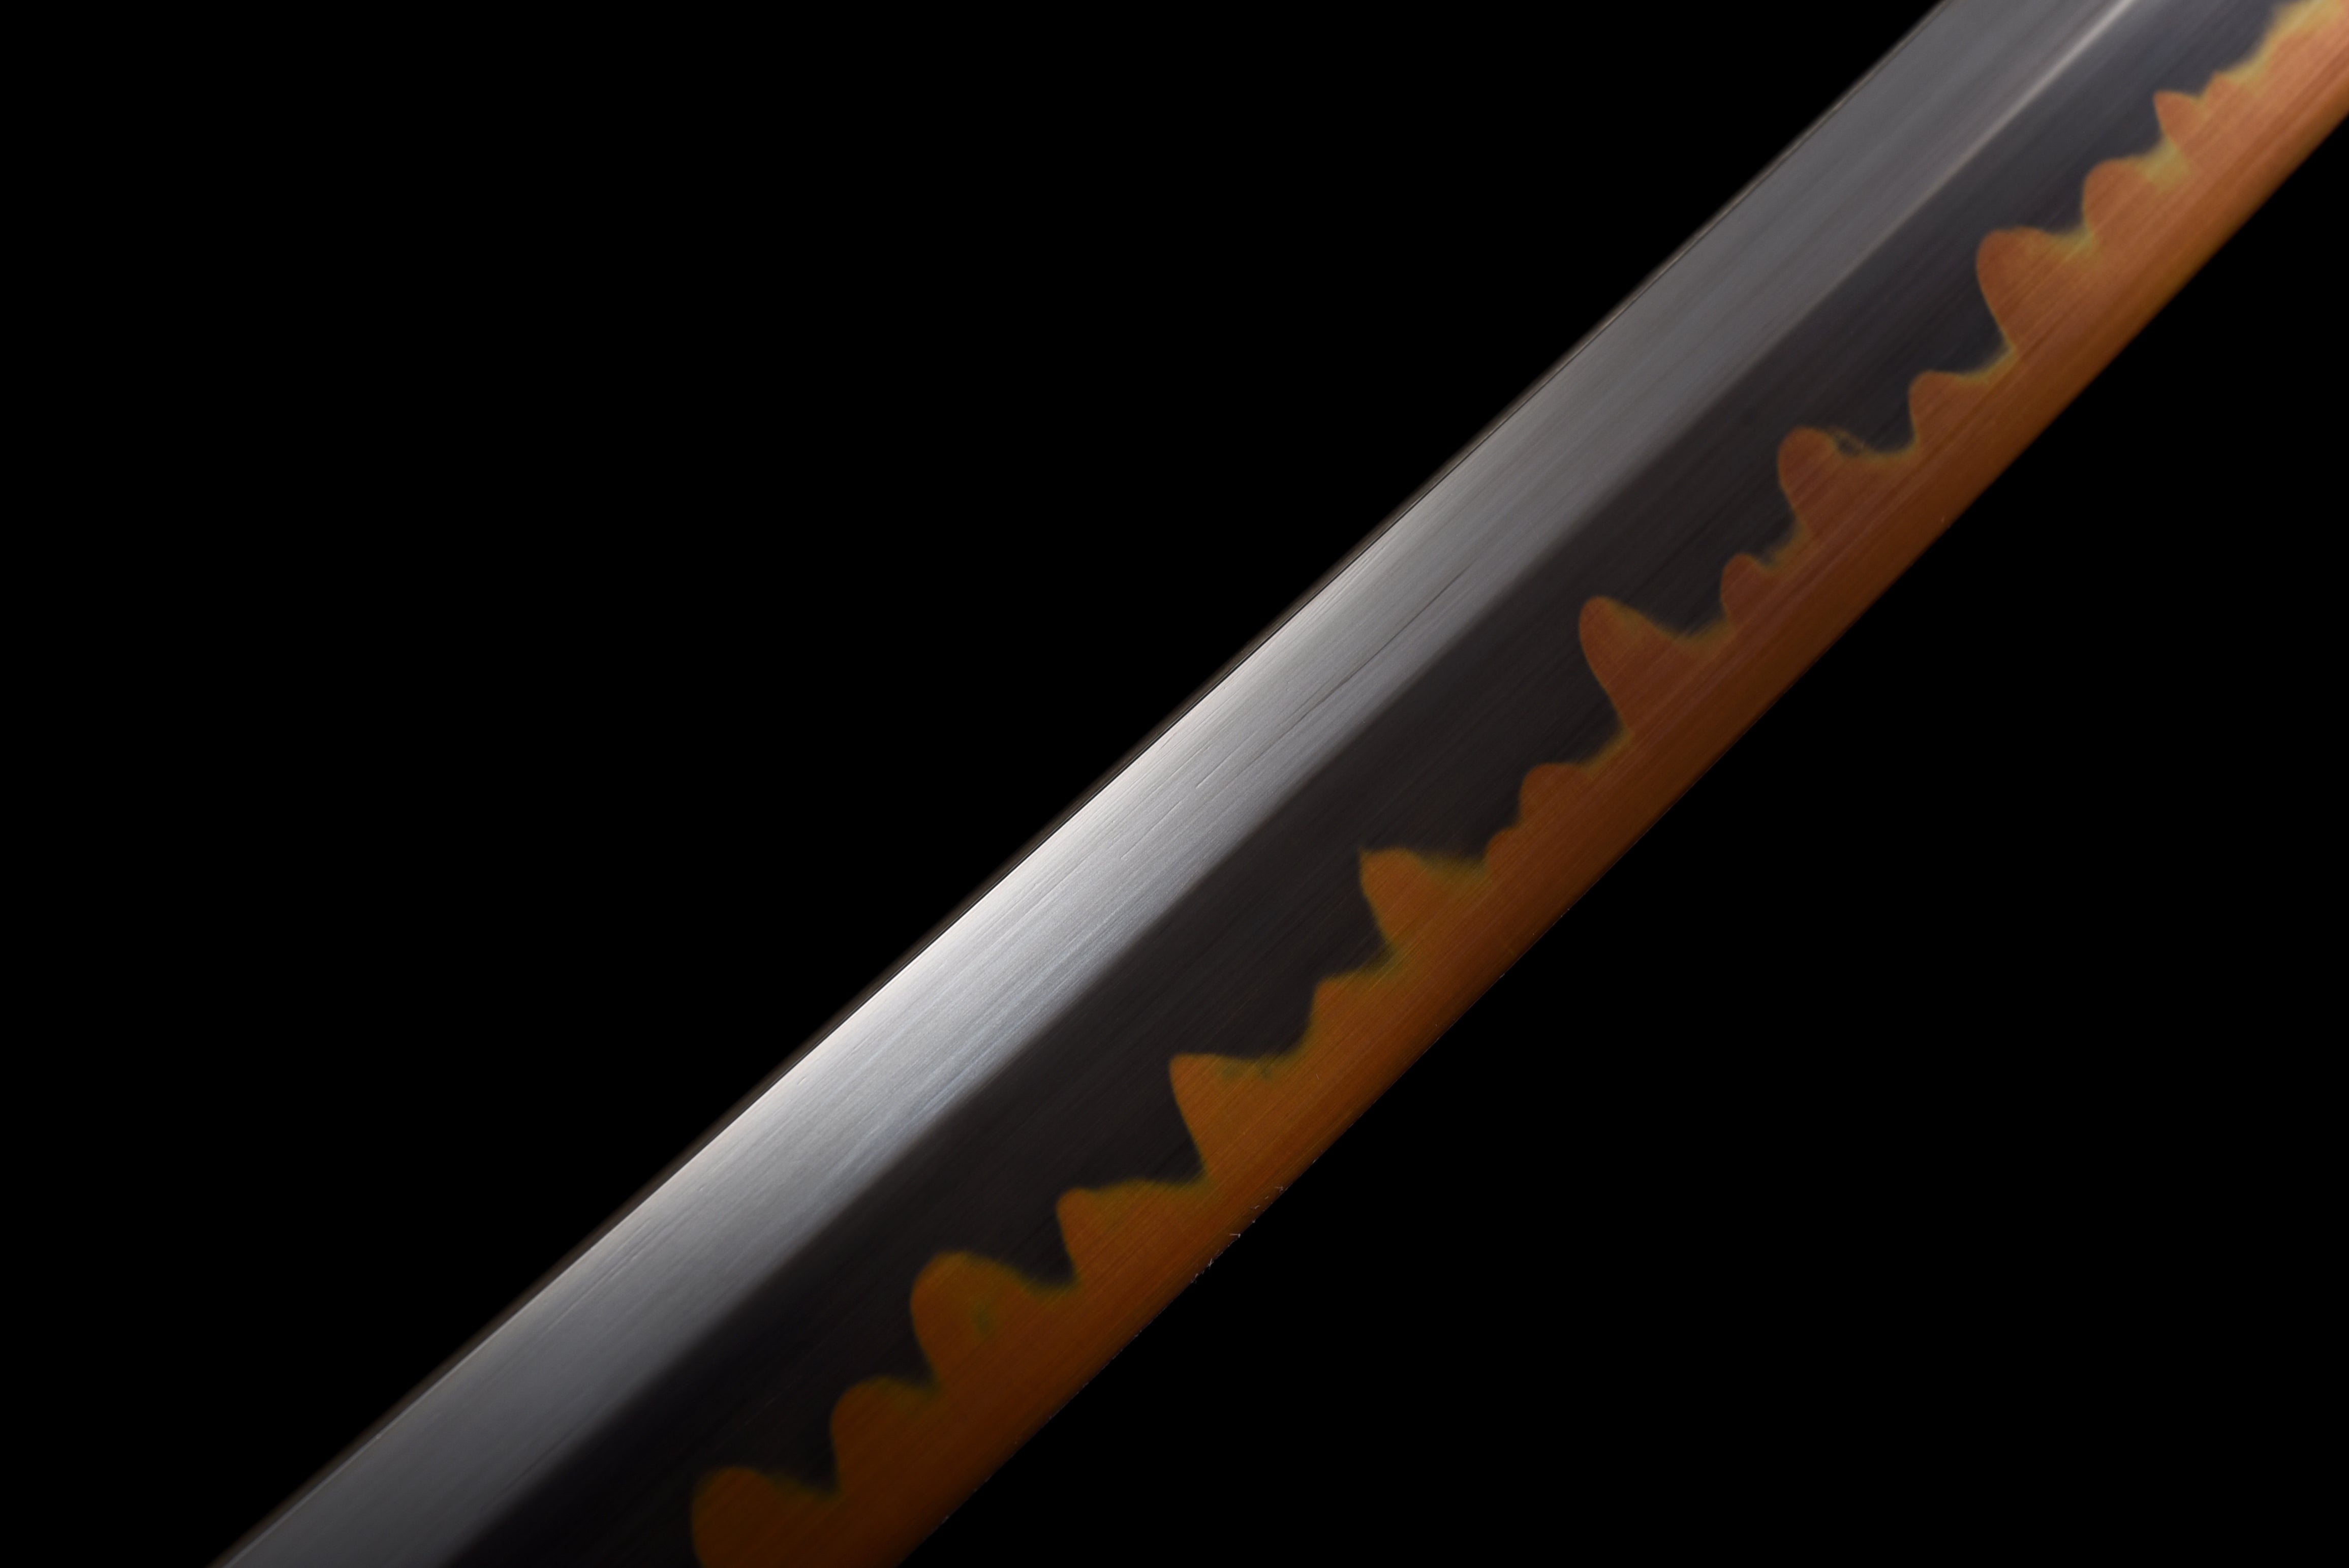 Demon Slayer Cosplay Anime Swords T10 Steel Clay Tempered with Hamon Handmade Katana Sword Real Japanese Samurai Sword